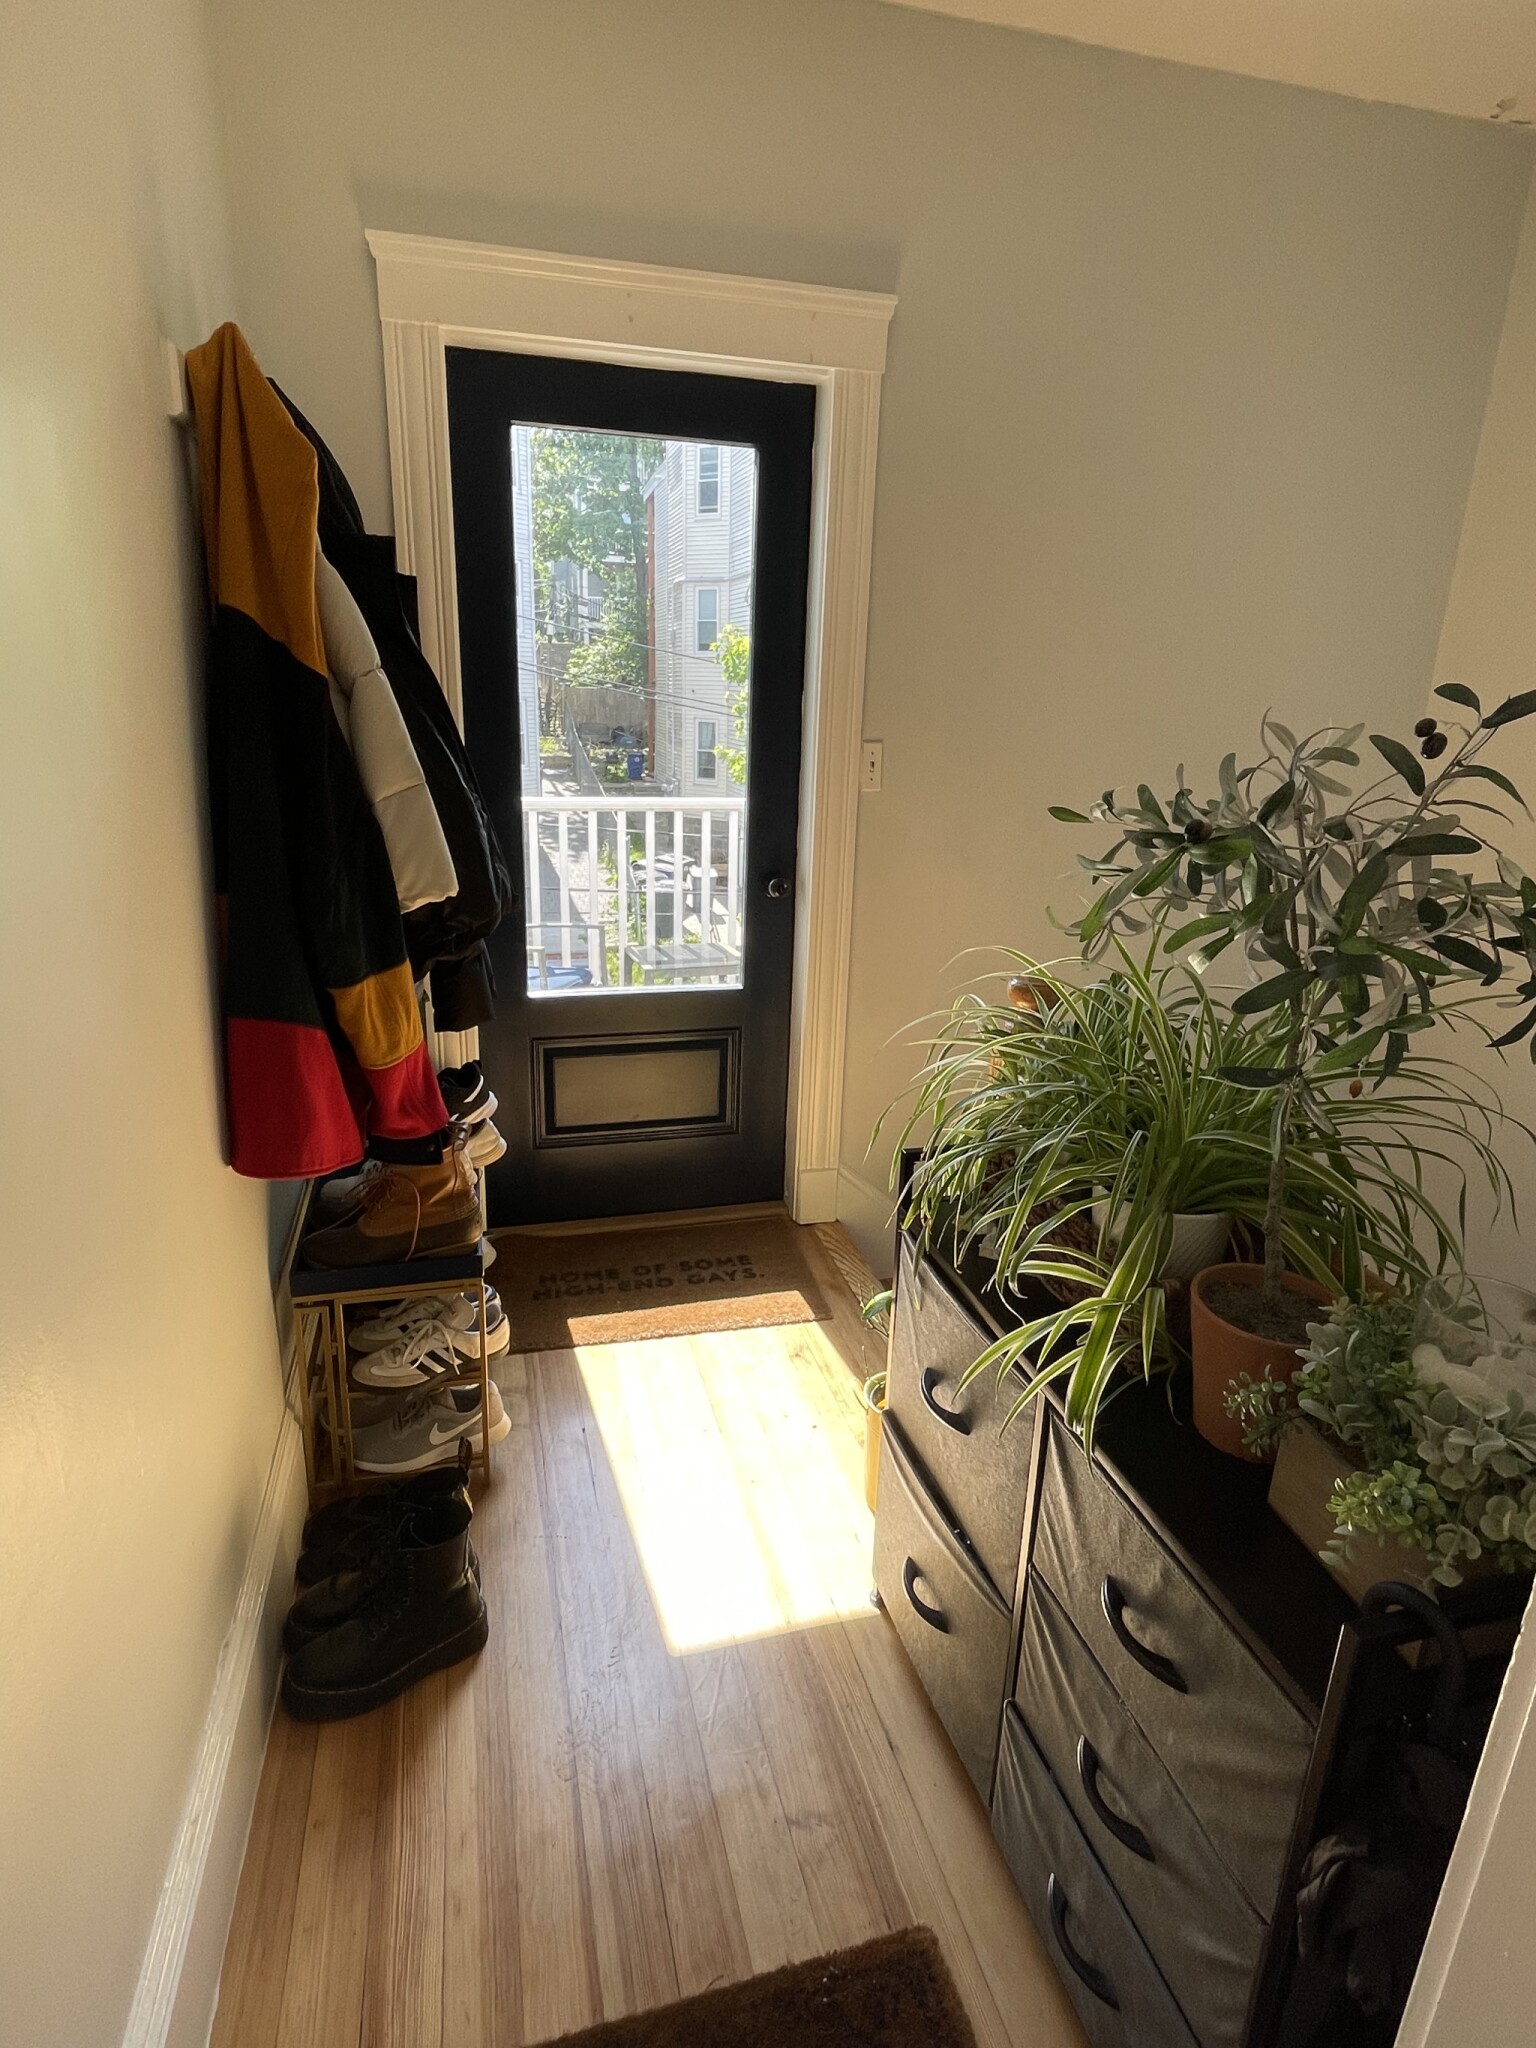 Photos of apartment on Juliette,Boston MA 02122